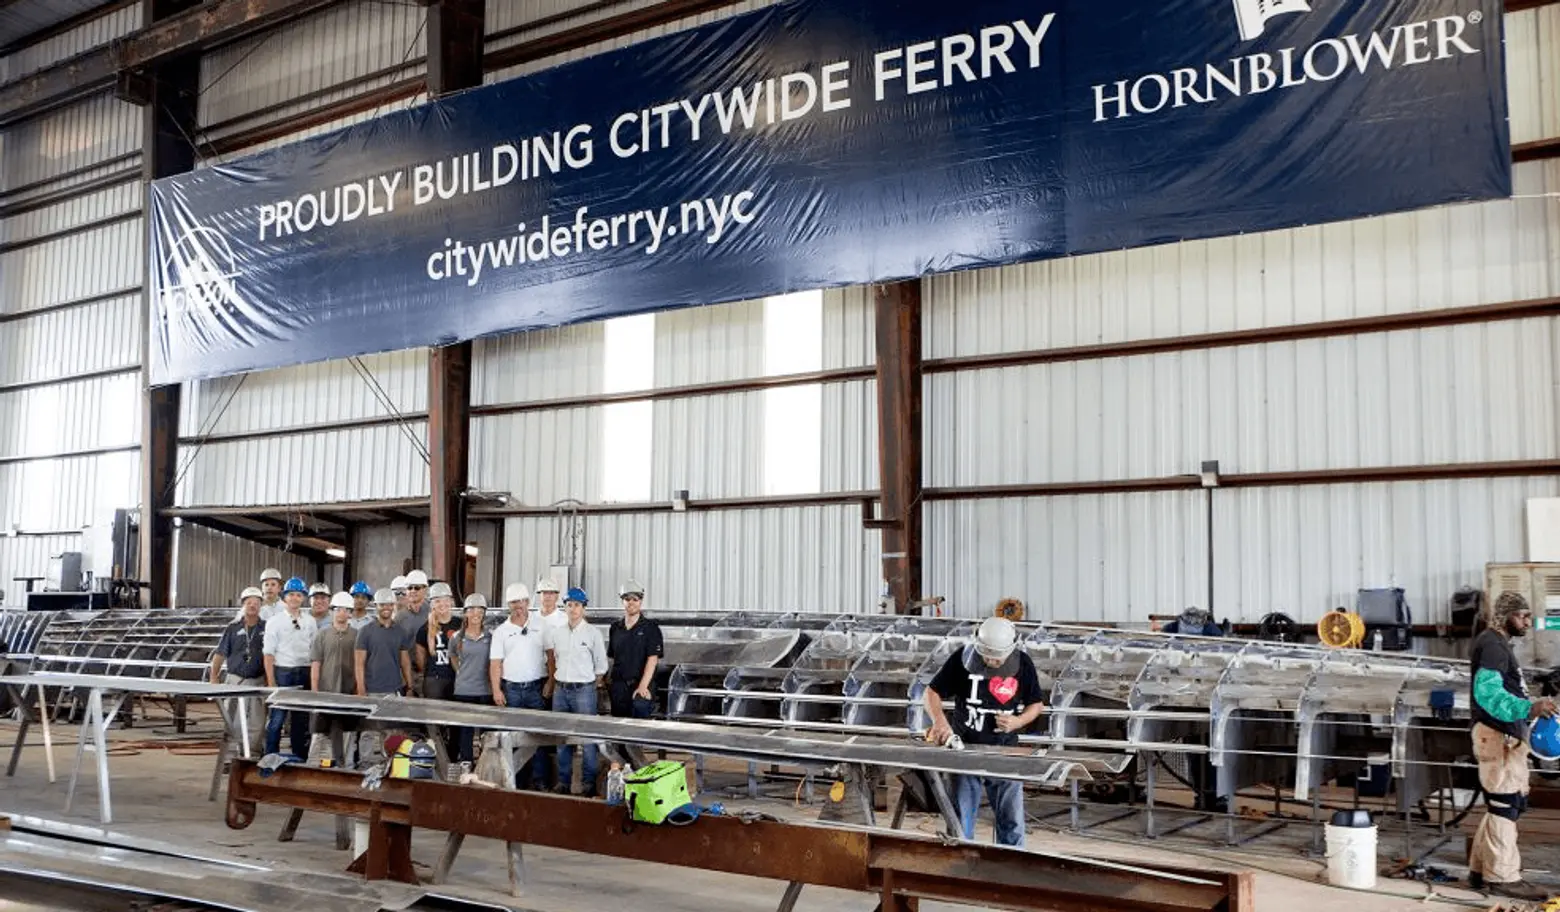 Citywide Ferry, CFS, Mayor De Blasio, Hornblower, NYCEDC, Metal Shark, Horizon, Cameron Clark